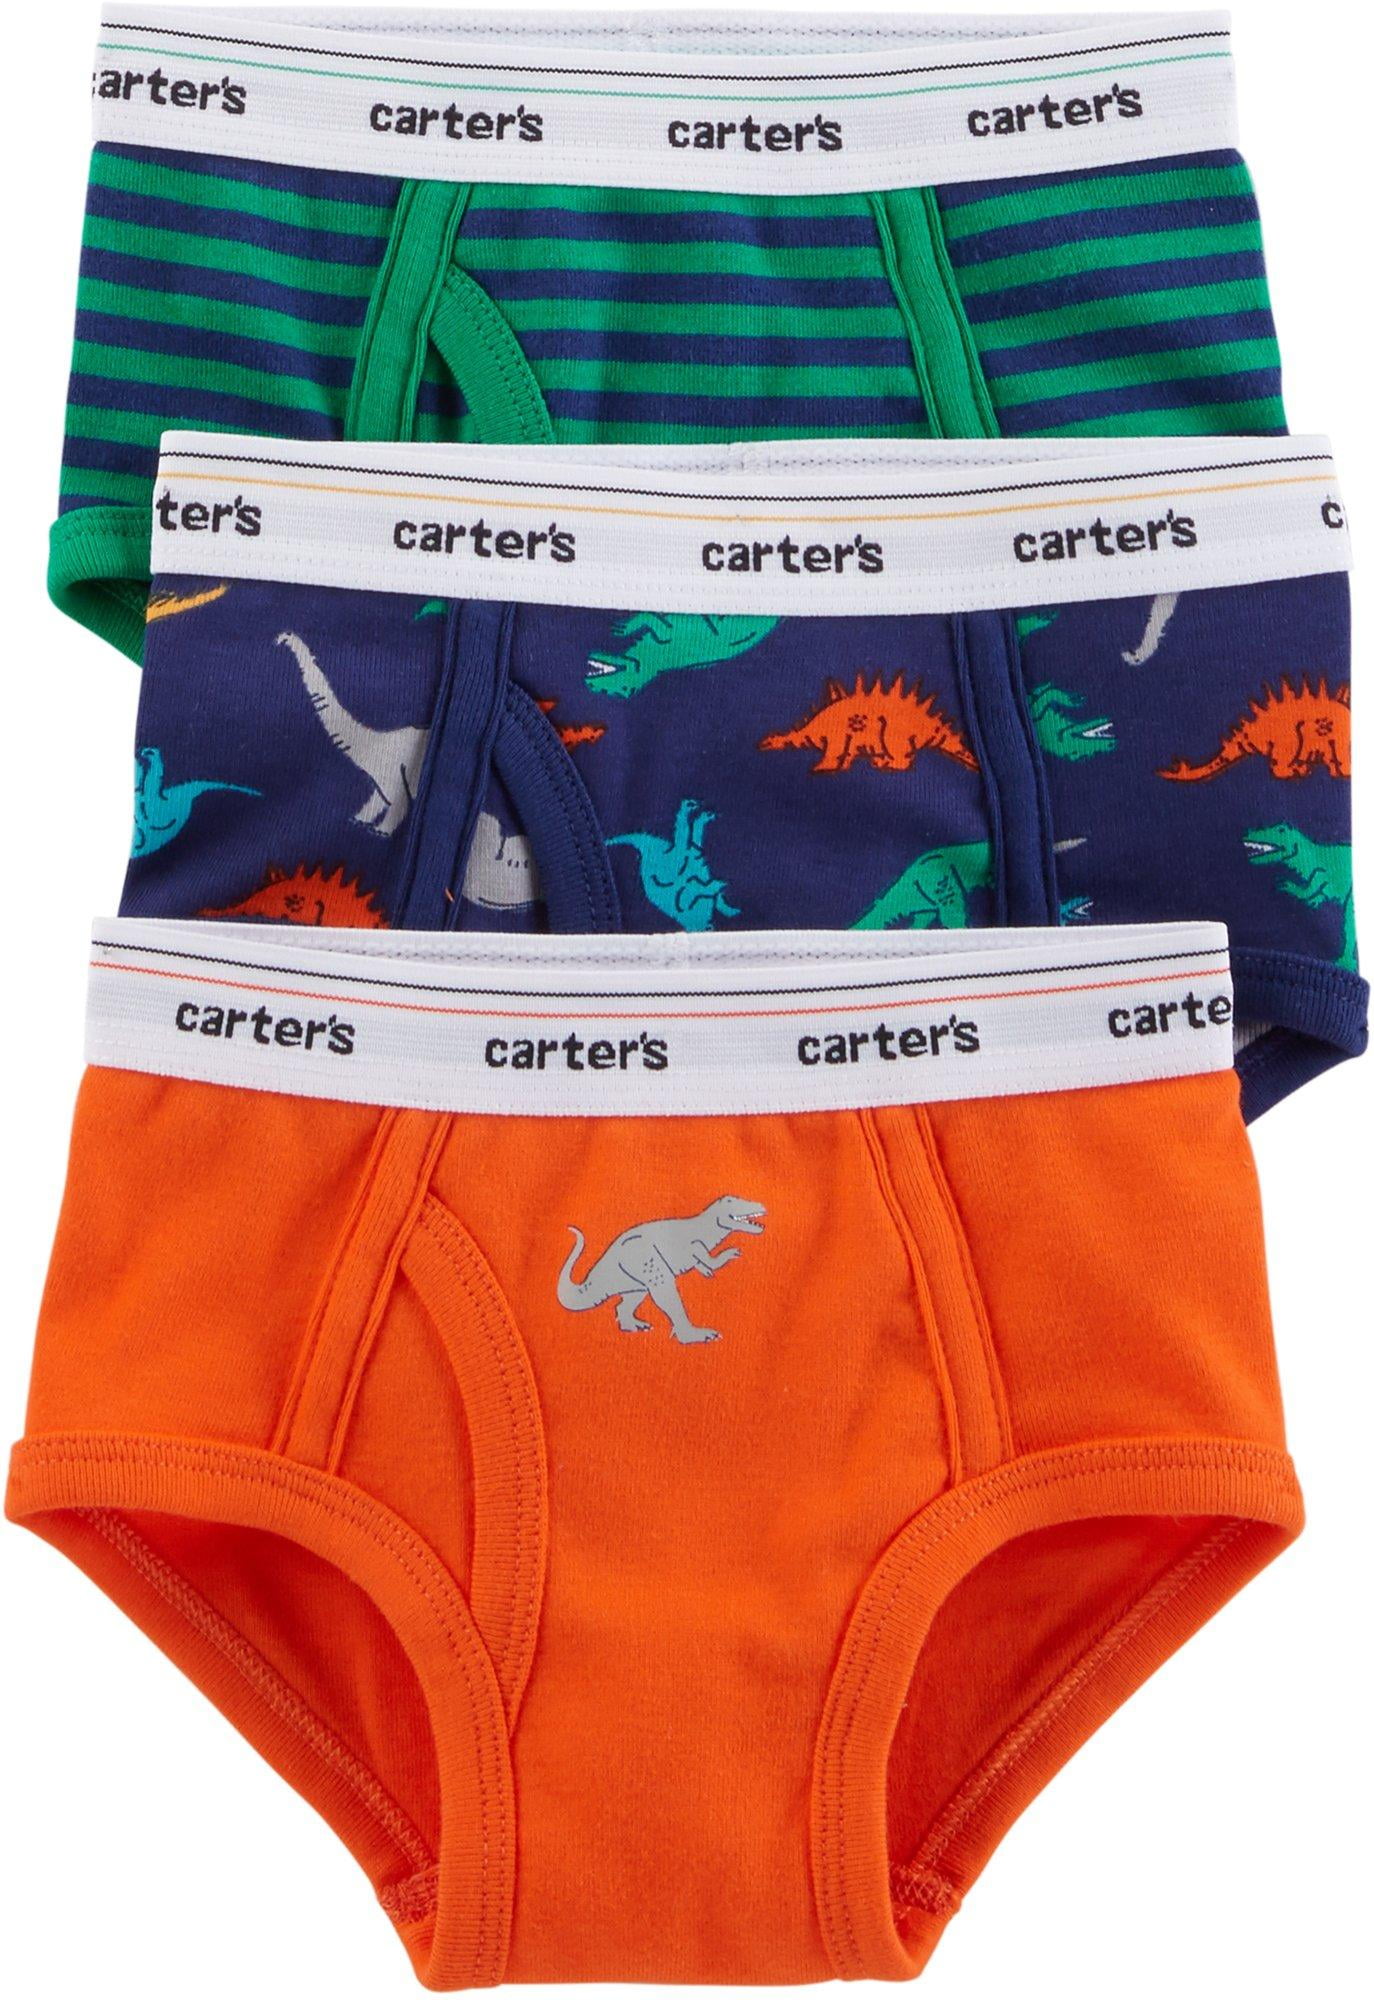 NWT Carter's Boys Brief Underwear 3pair/pack Dinosaurs 